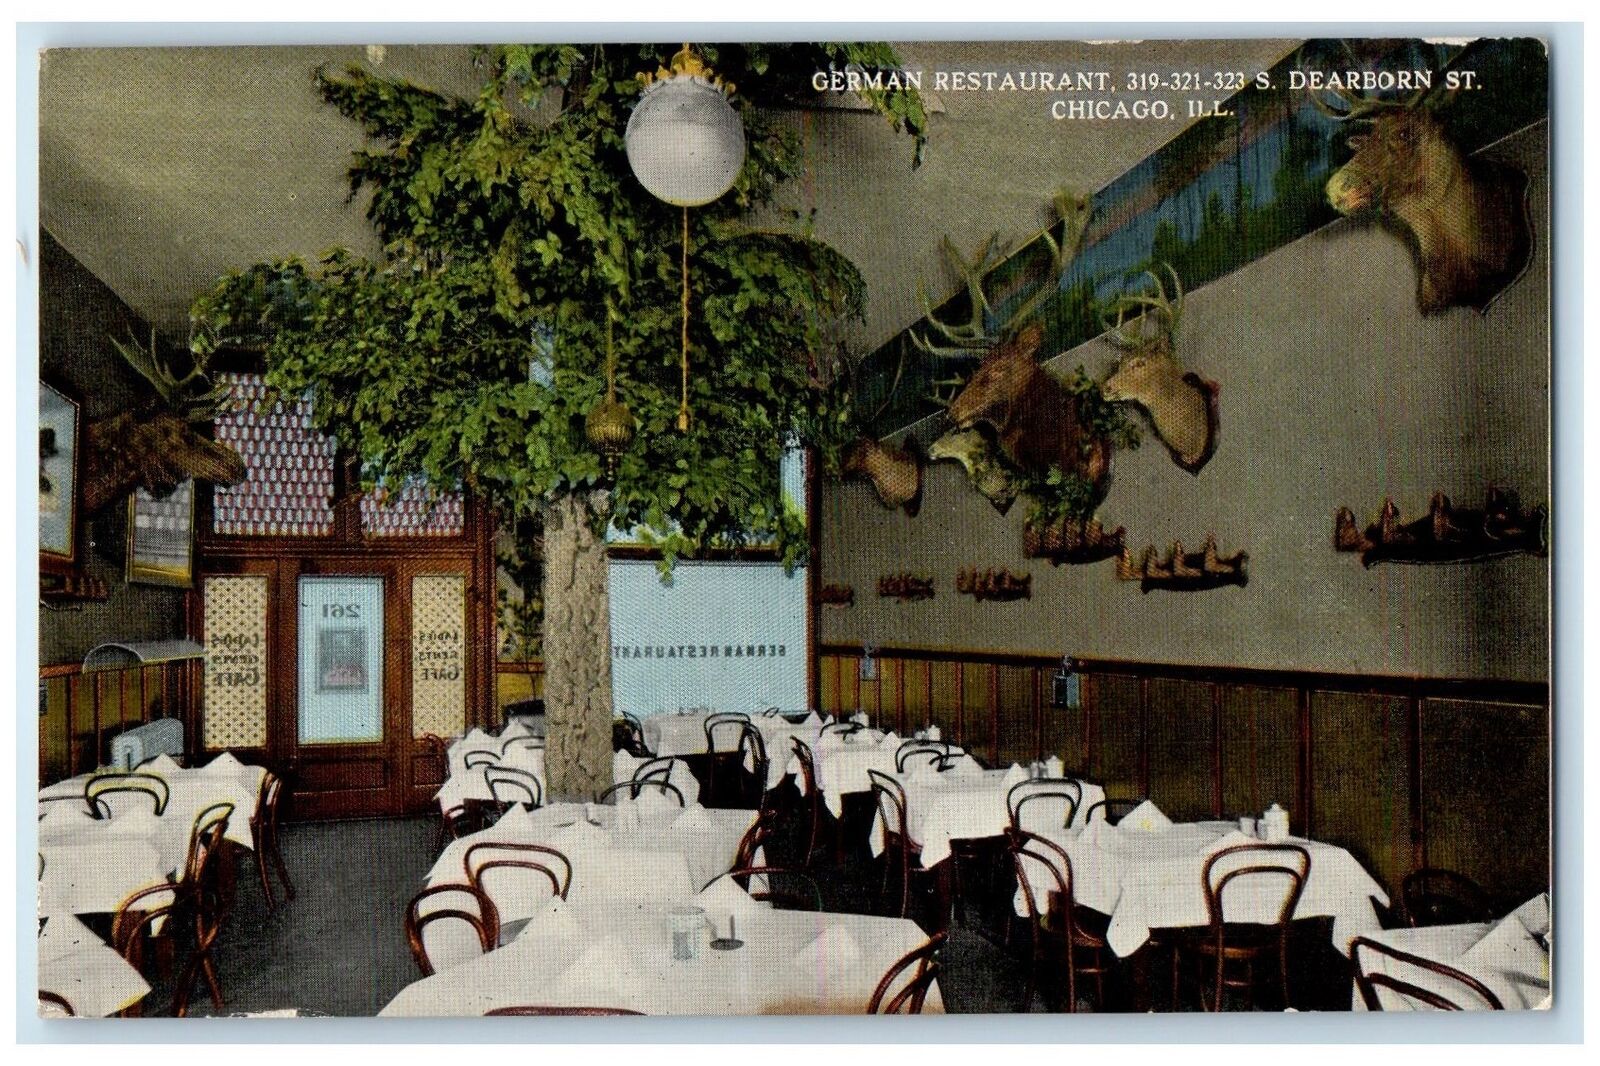 c1950's German Restaurant Interior Dining Dearborn Chicago Illinois IL Postcard